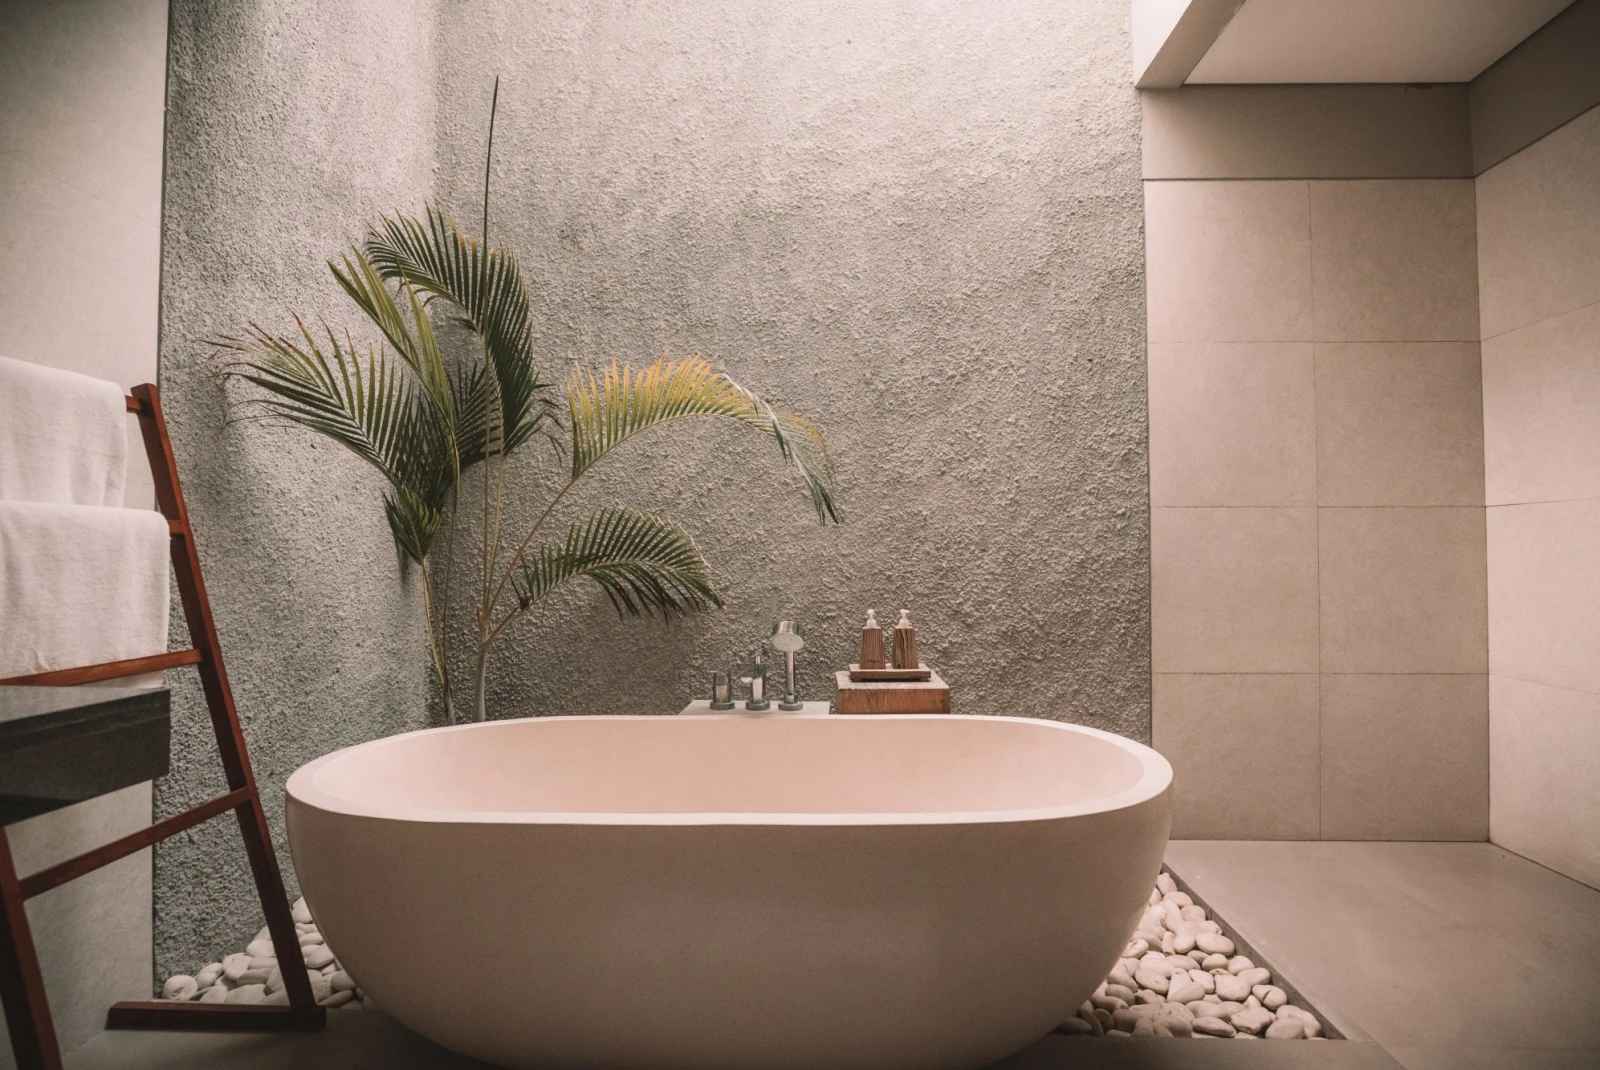 a ceramic outdoor bathtub near palm leaves